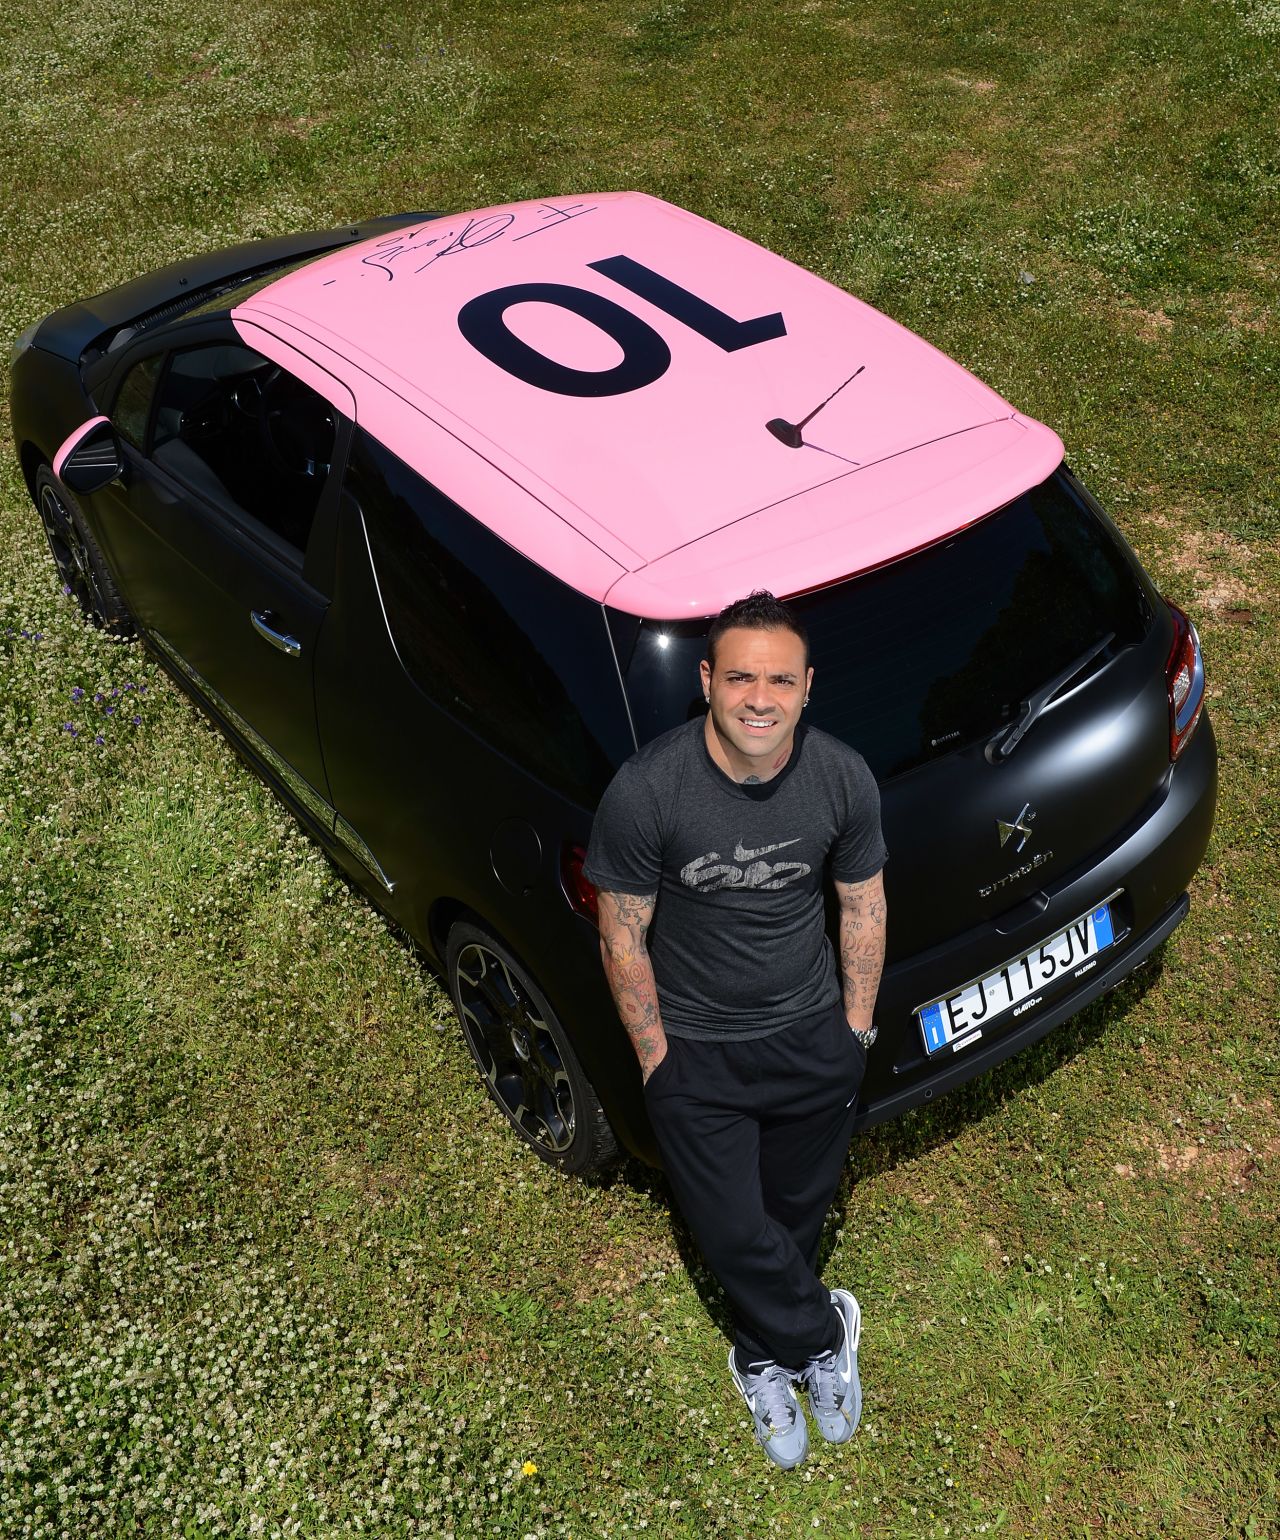 Former Palermo striker Fabrizio Miccoli poses near the Citroen DS3 which was designed for charity.